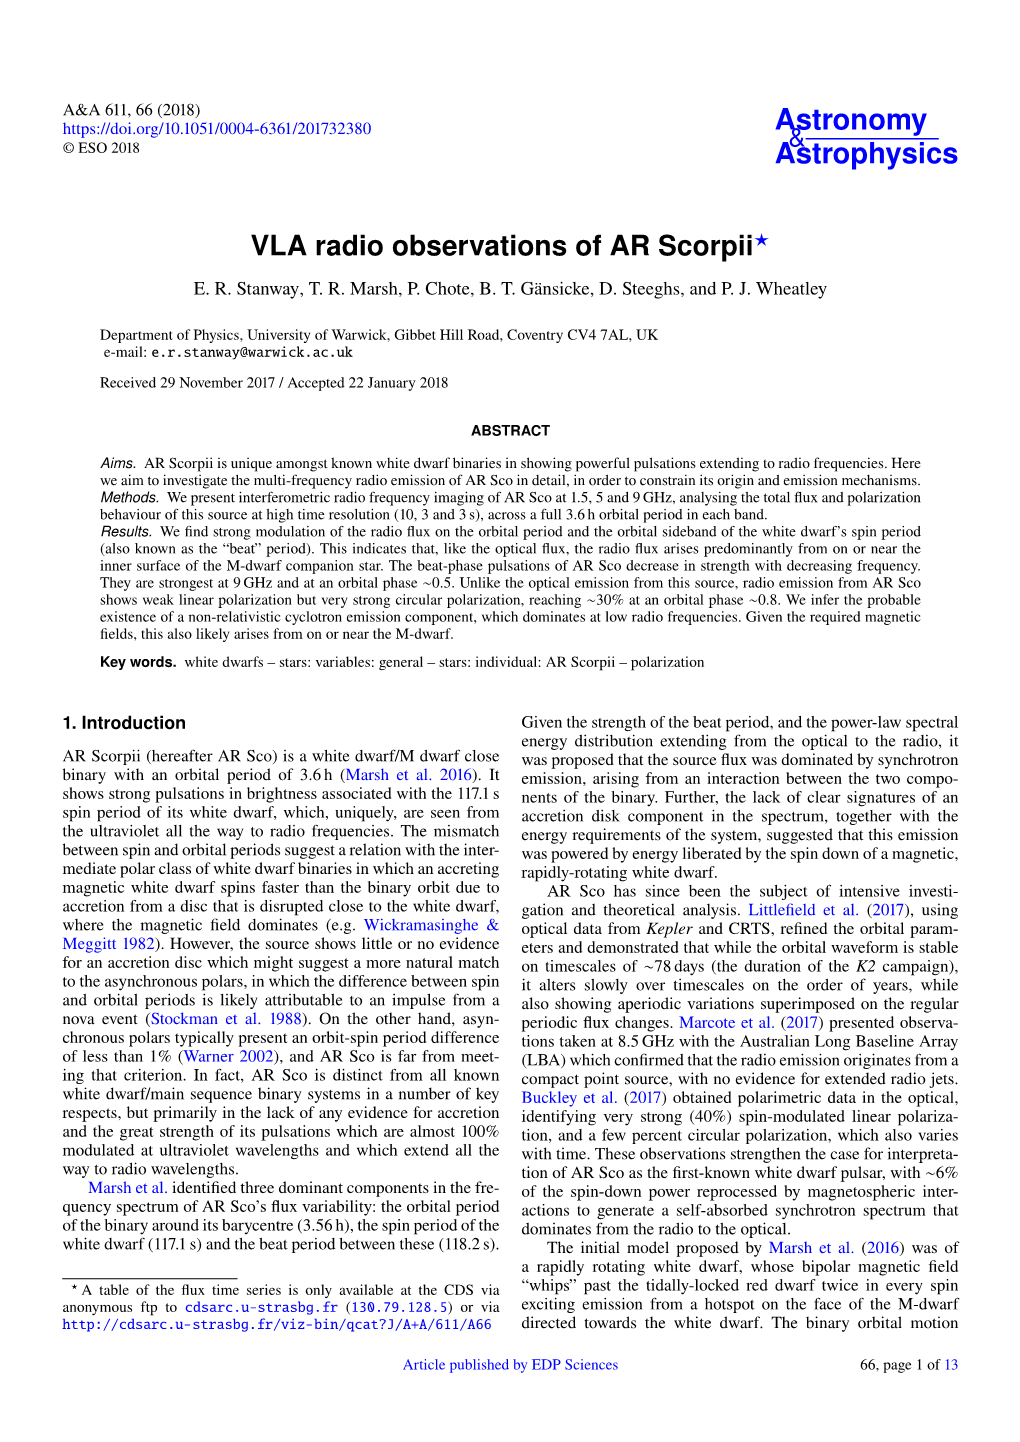 VLA Radio Observations of AR Scorpii? E